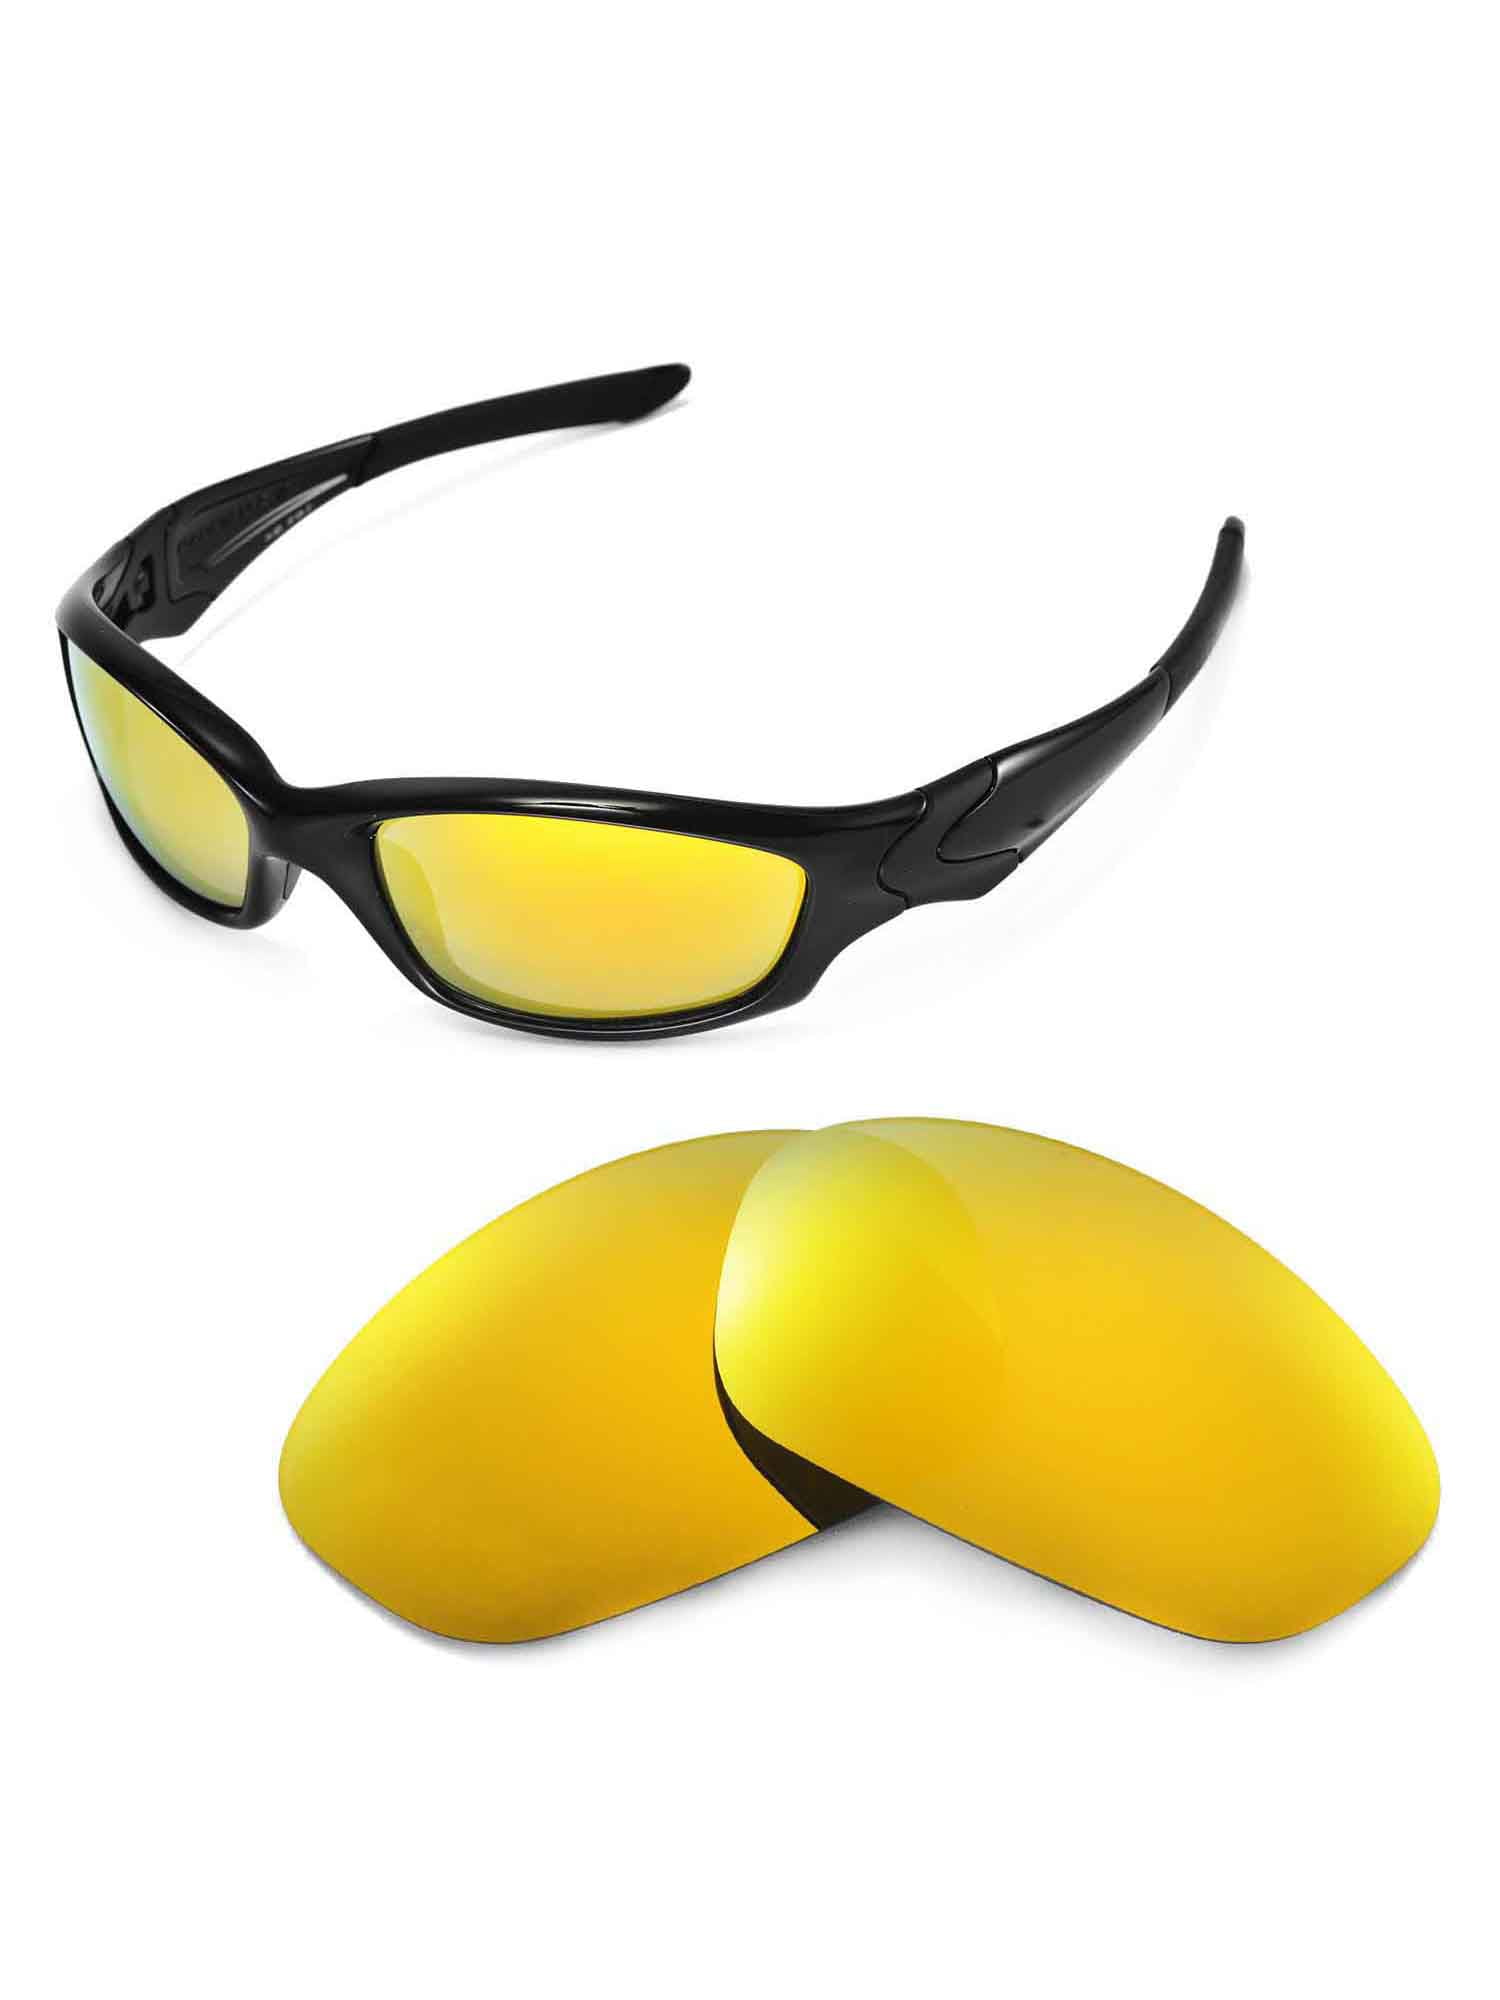 Walleva 24K Polarized Replacement Lenses for Oakley Jacket Sunglasses - Walmart.com